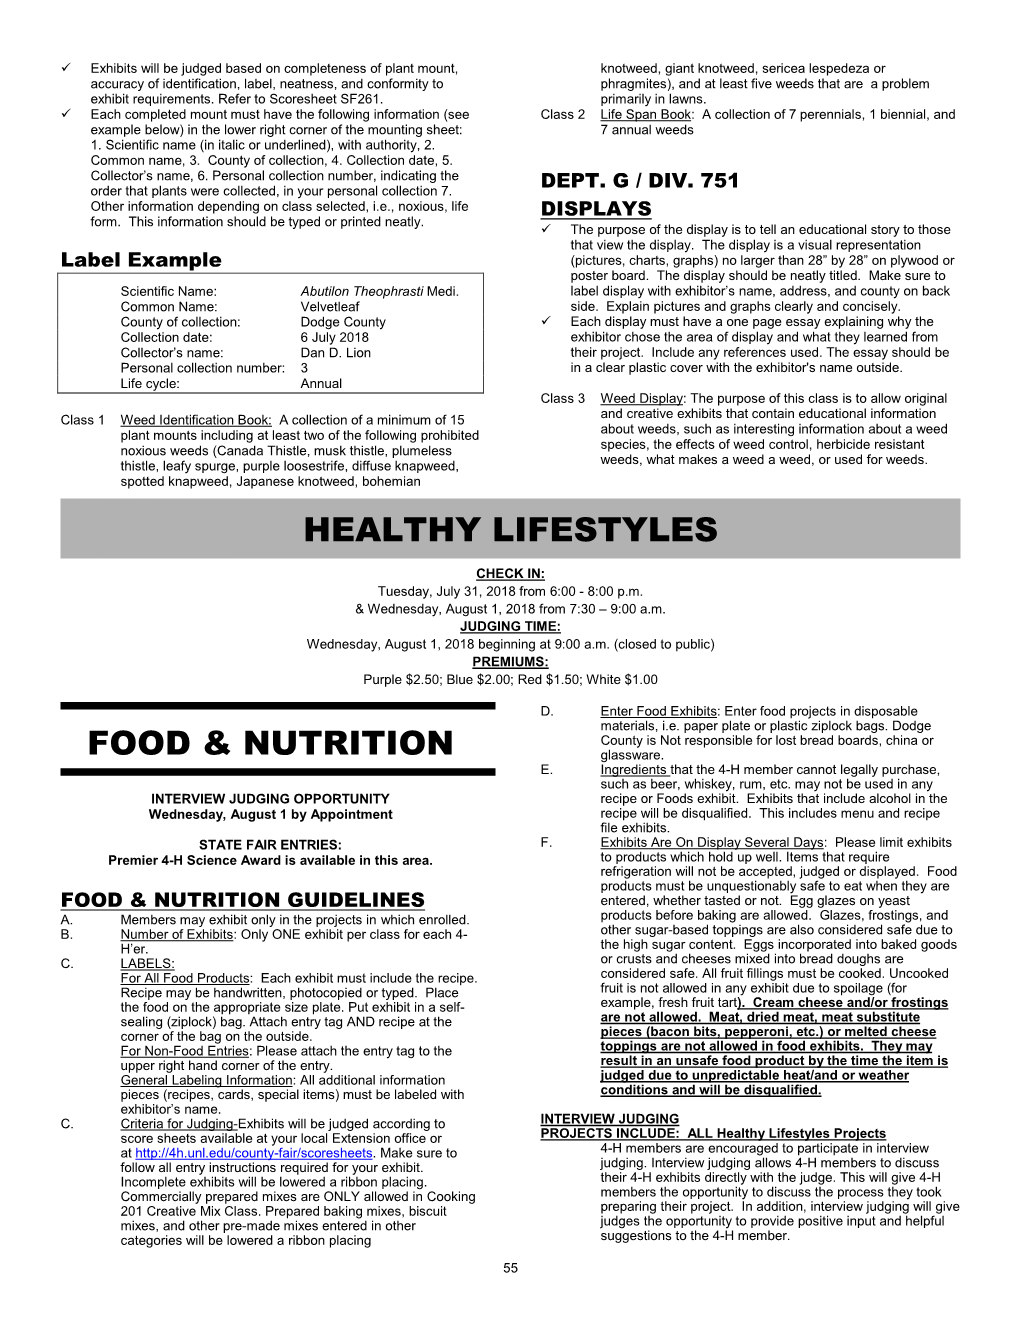 Food & Nutrition Healthy Lifestyles